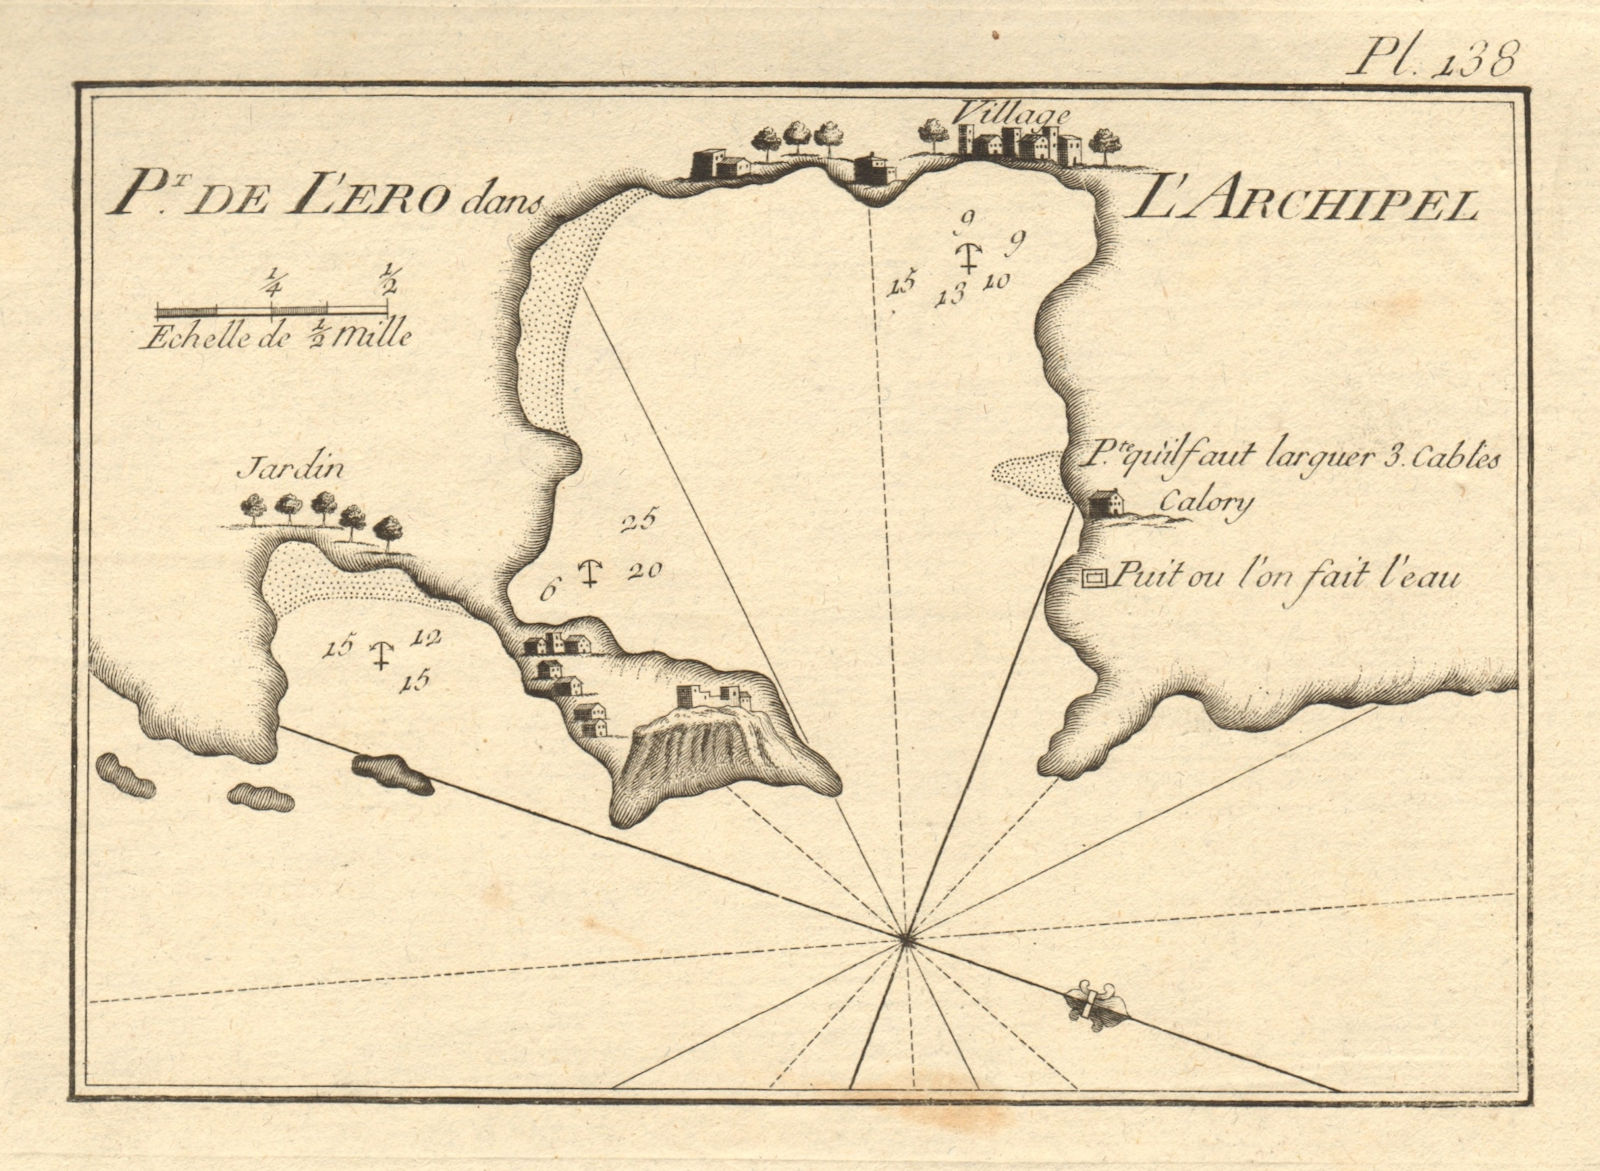 Port de L'Ero dans l'Archipel. Alinda, Leros, Dodecanese. Greece. ROUX 1804 map